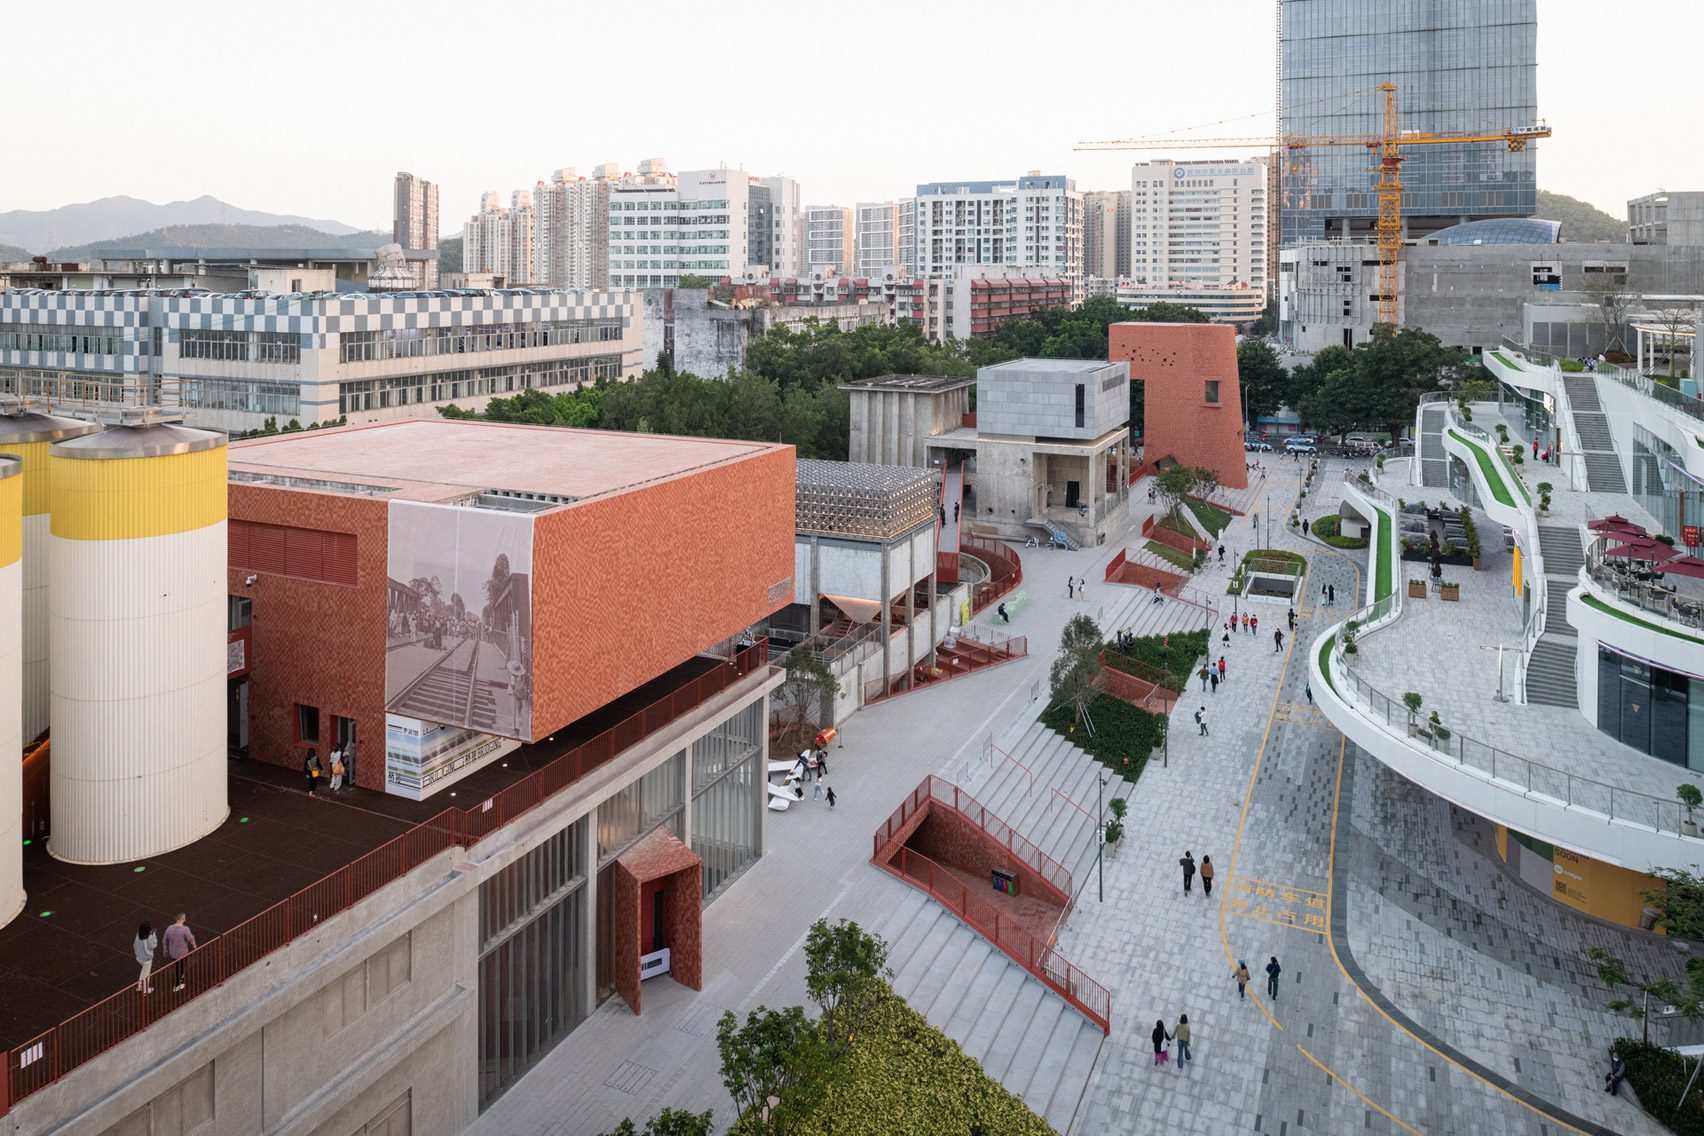 Cultural centre in Shenzhen by Urbanus